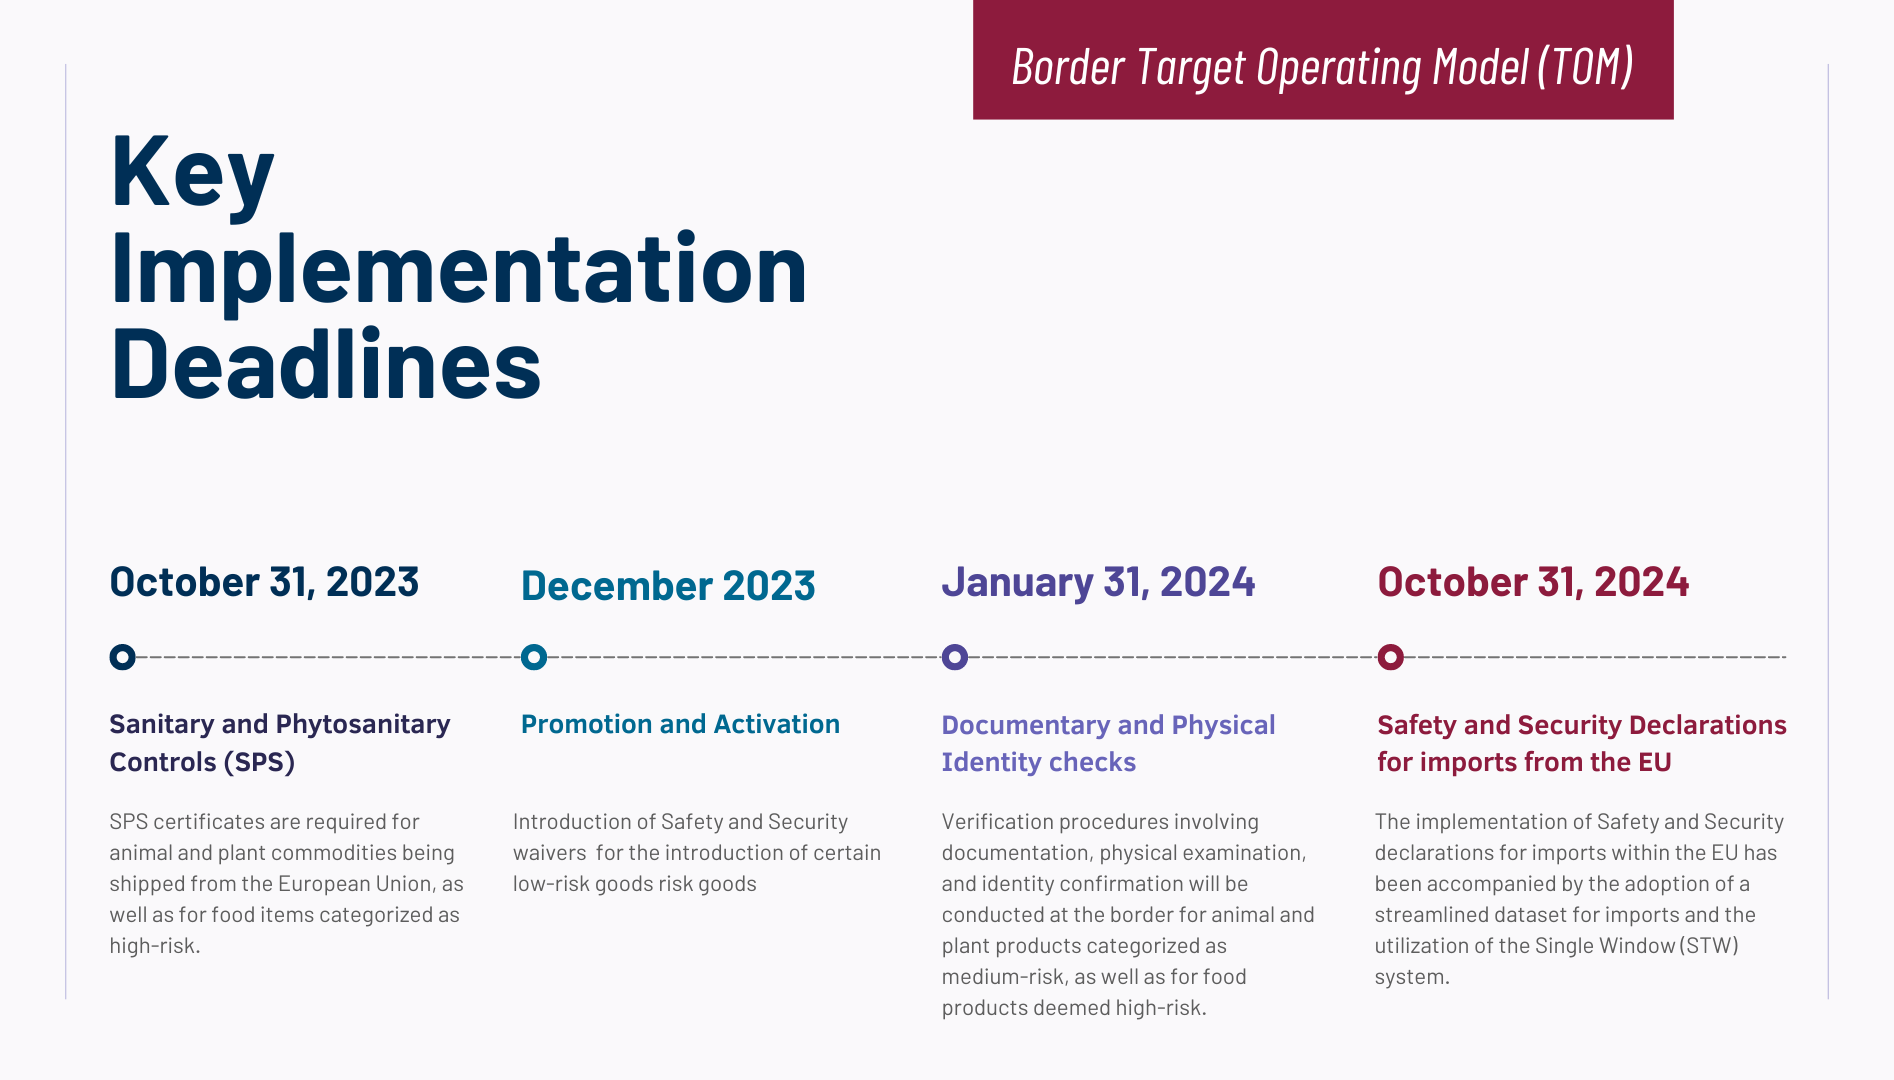 Key Implementation Deadlines - Border Target Operating Model